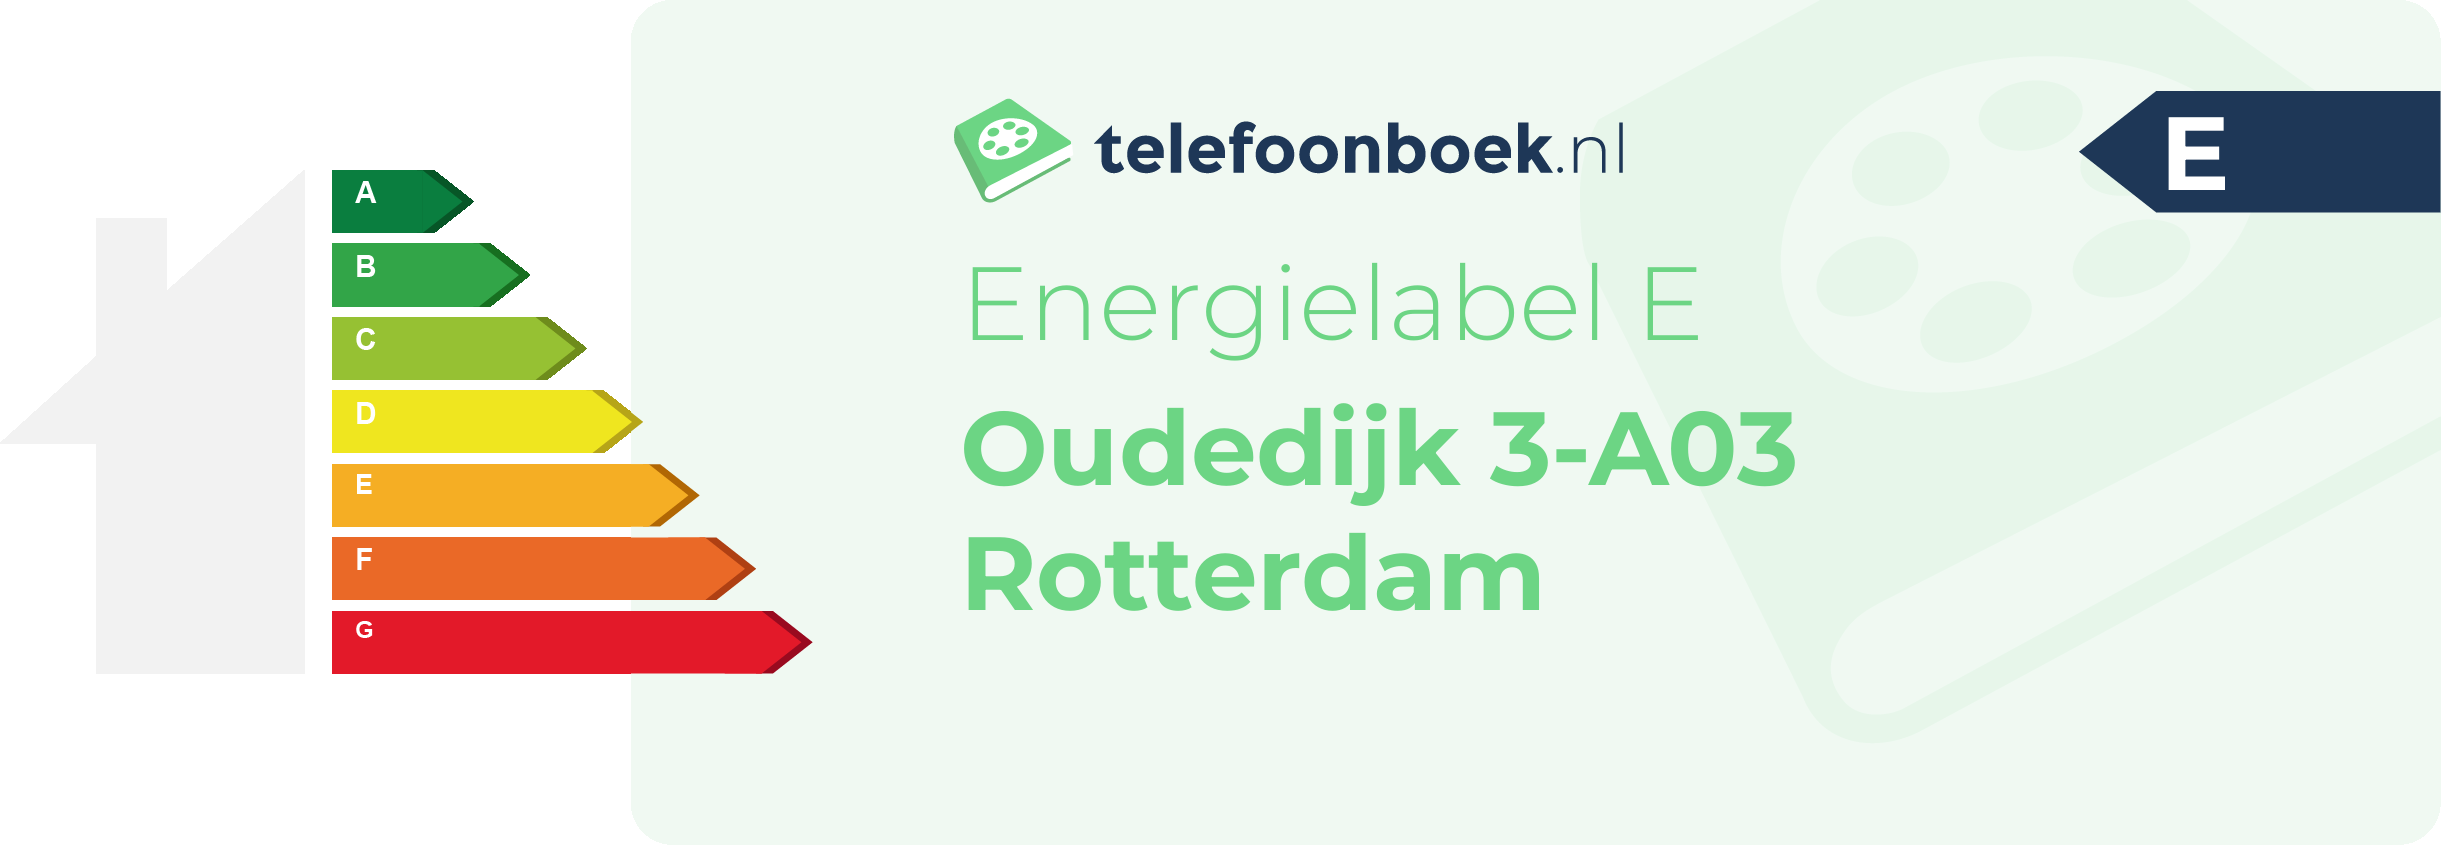 Energielabel Oudedijk 3-A03 Rotterdam